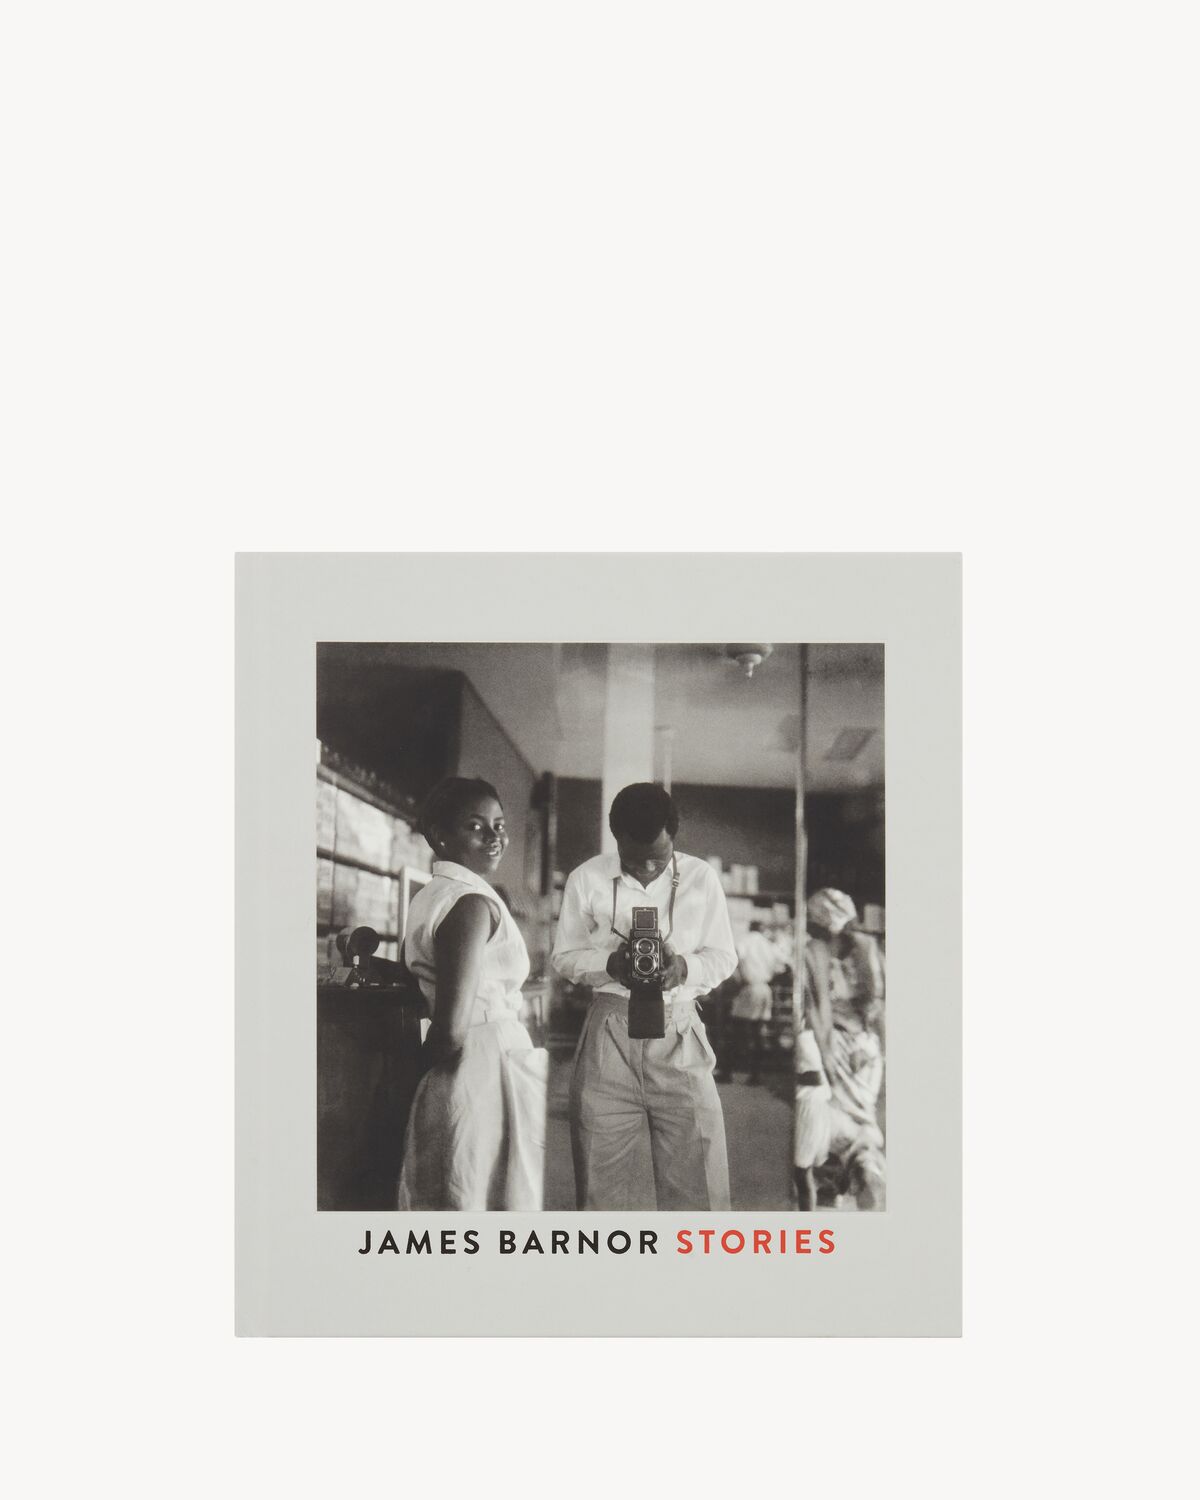 JAMES BARNOR STORIES